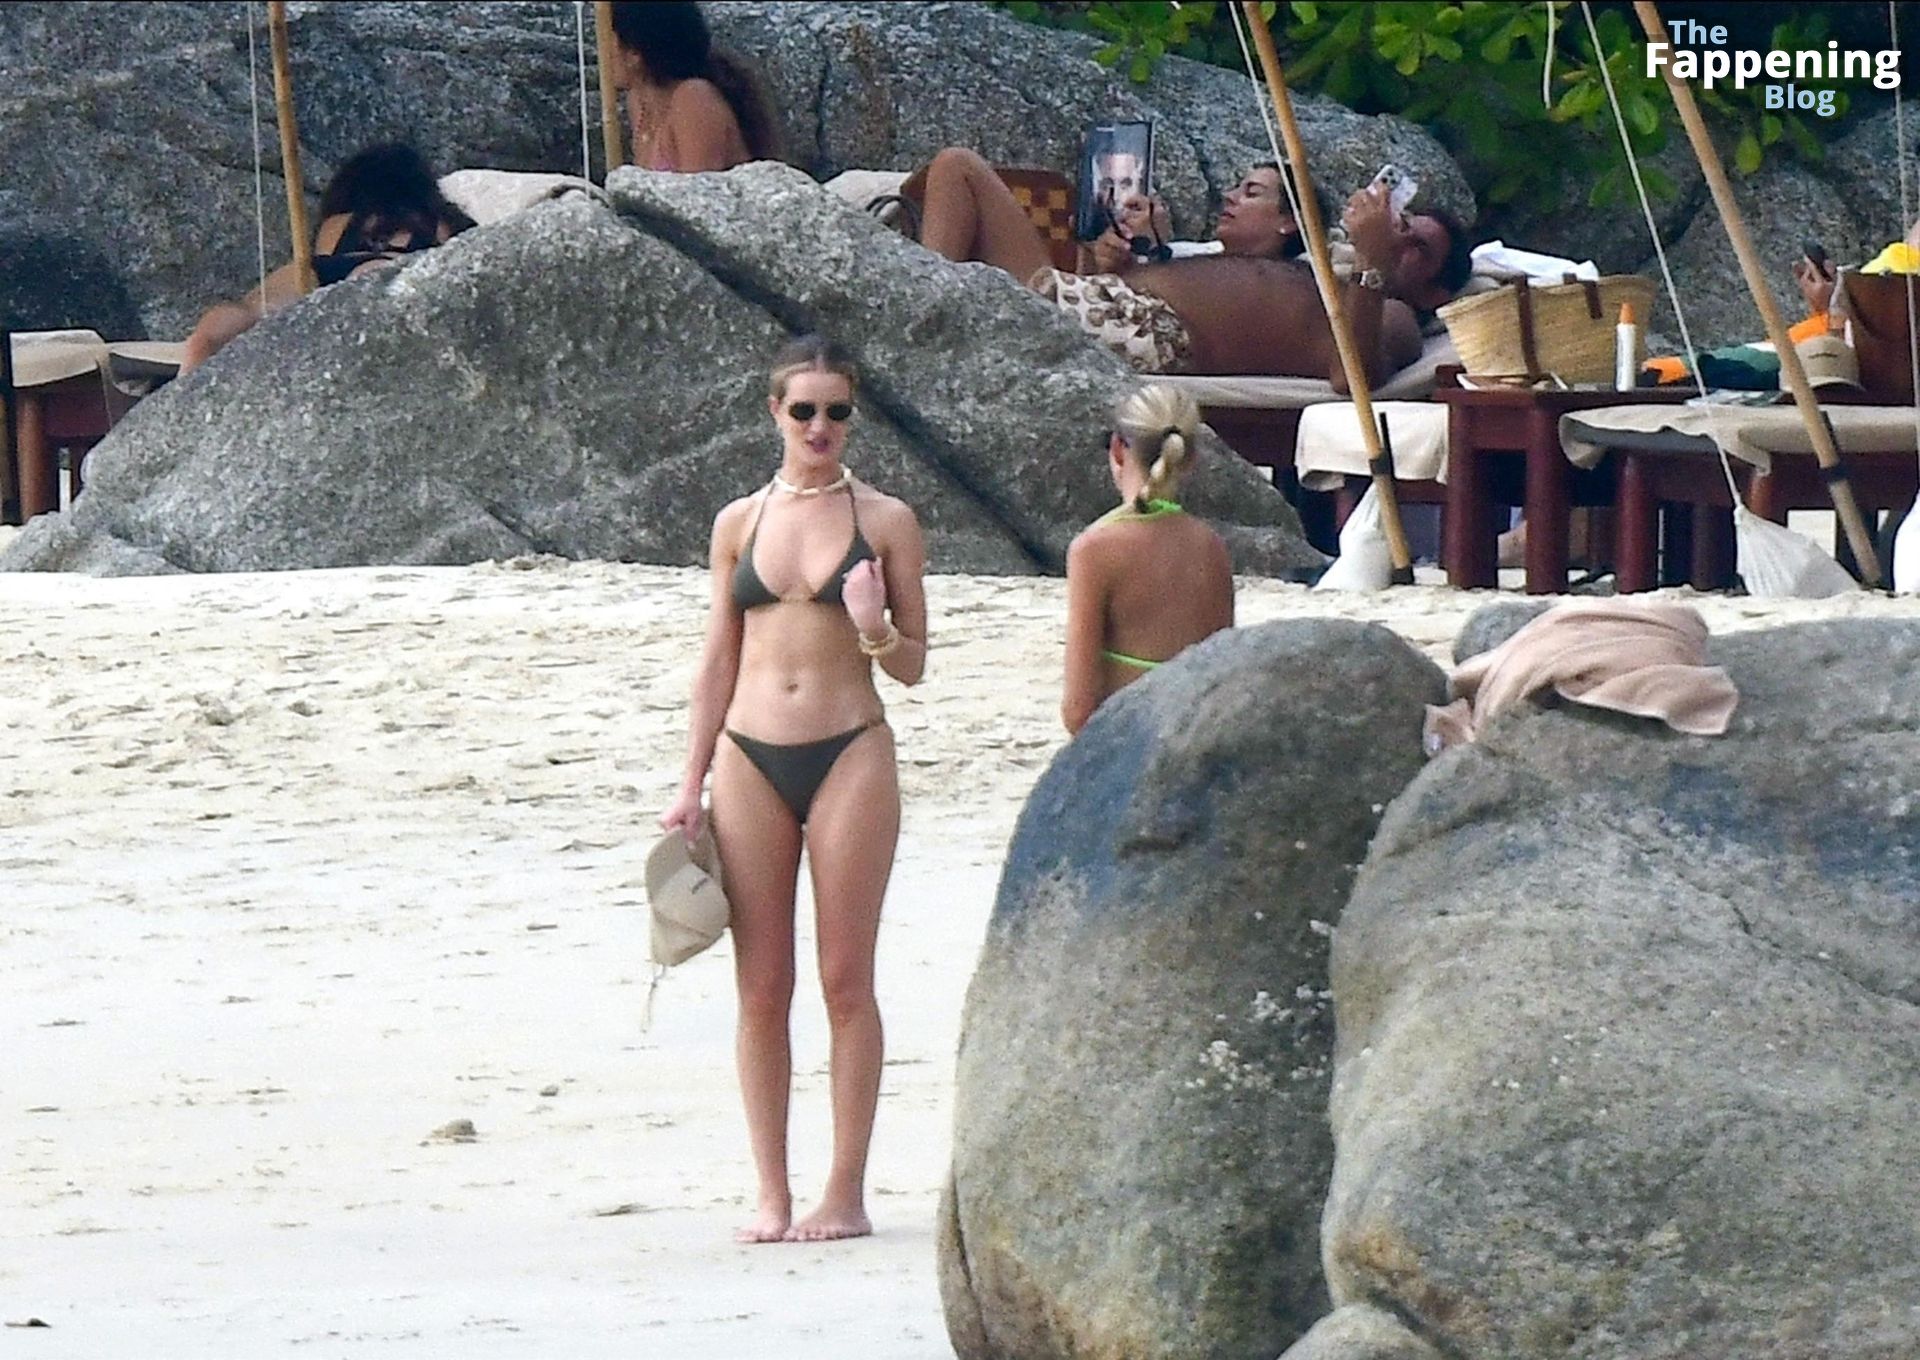 Rosie Huntington-Whiteley Shows Off Her Stunning Figure Wearing a Tiny Bikini (38 Photos)